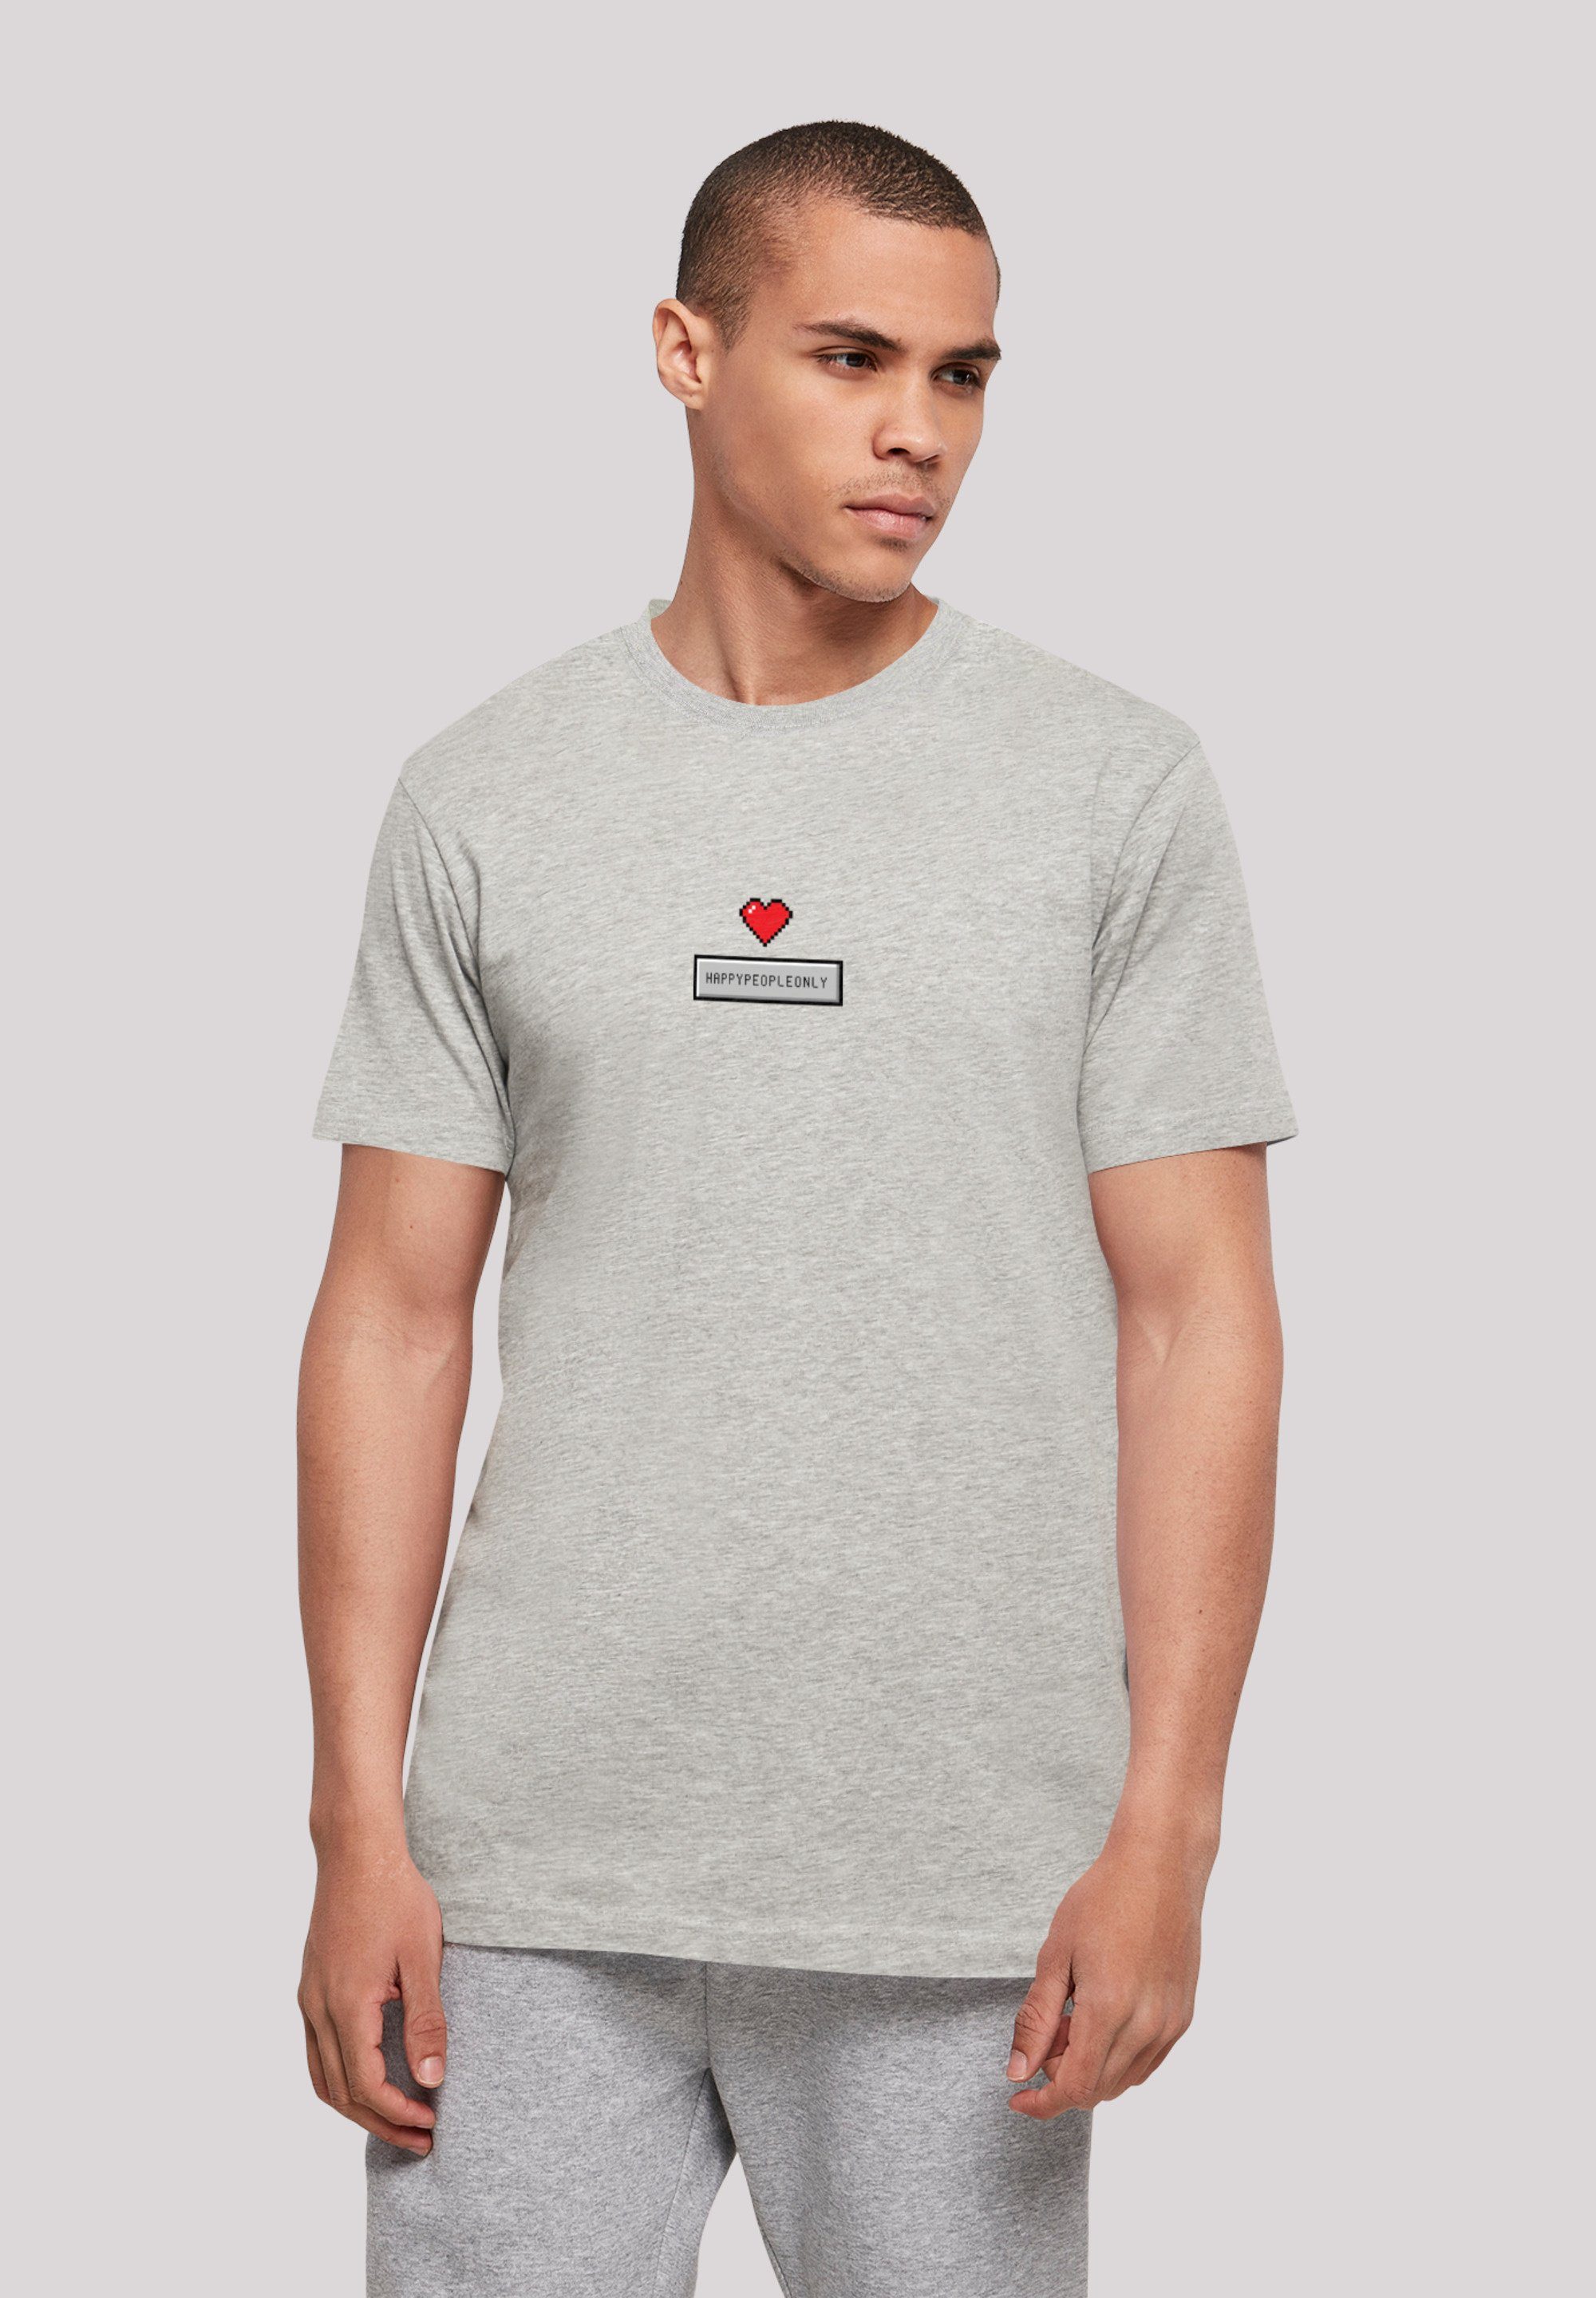 F4NT4STIC T-Shirt Happy New Year Pixel Herz Print heather grey | T-Shirts